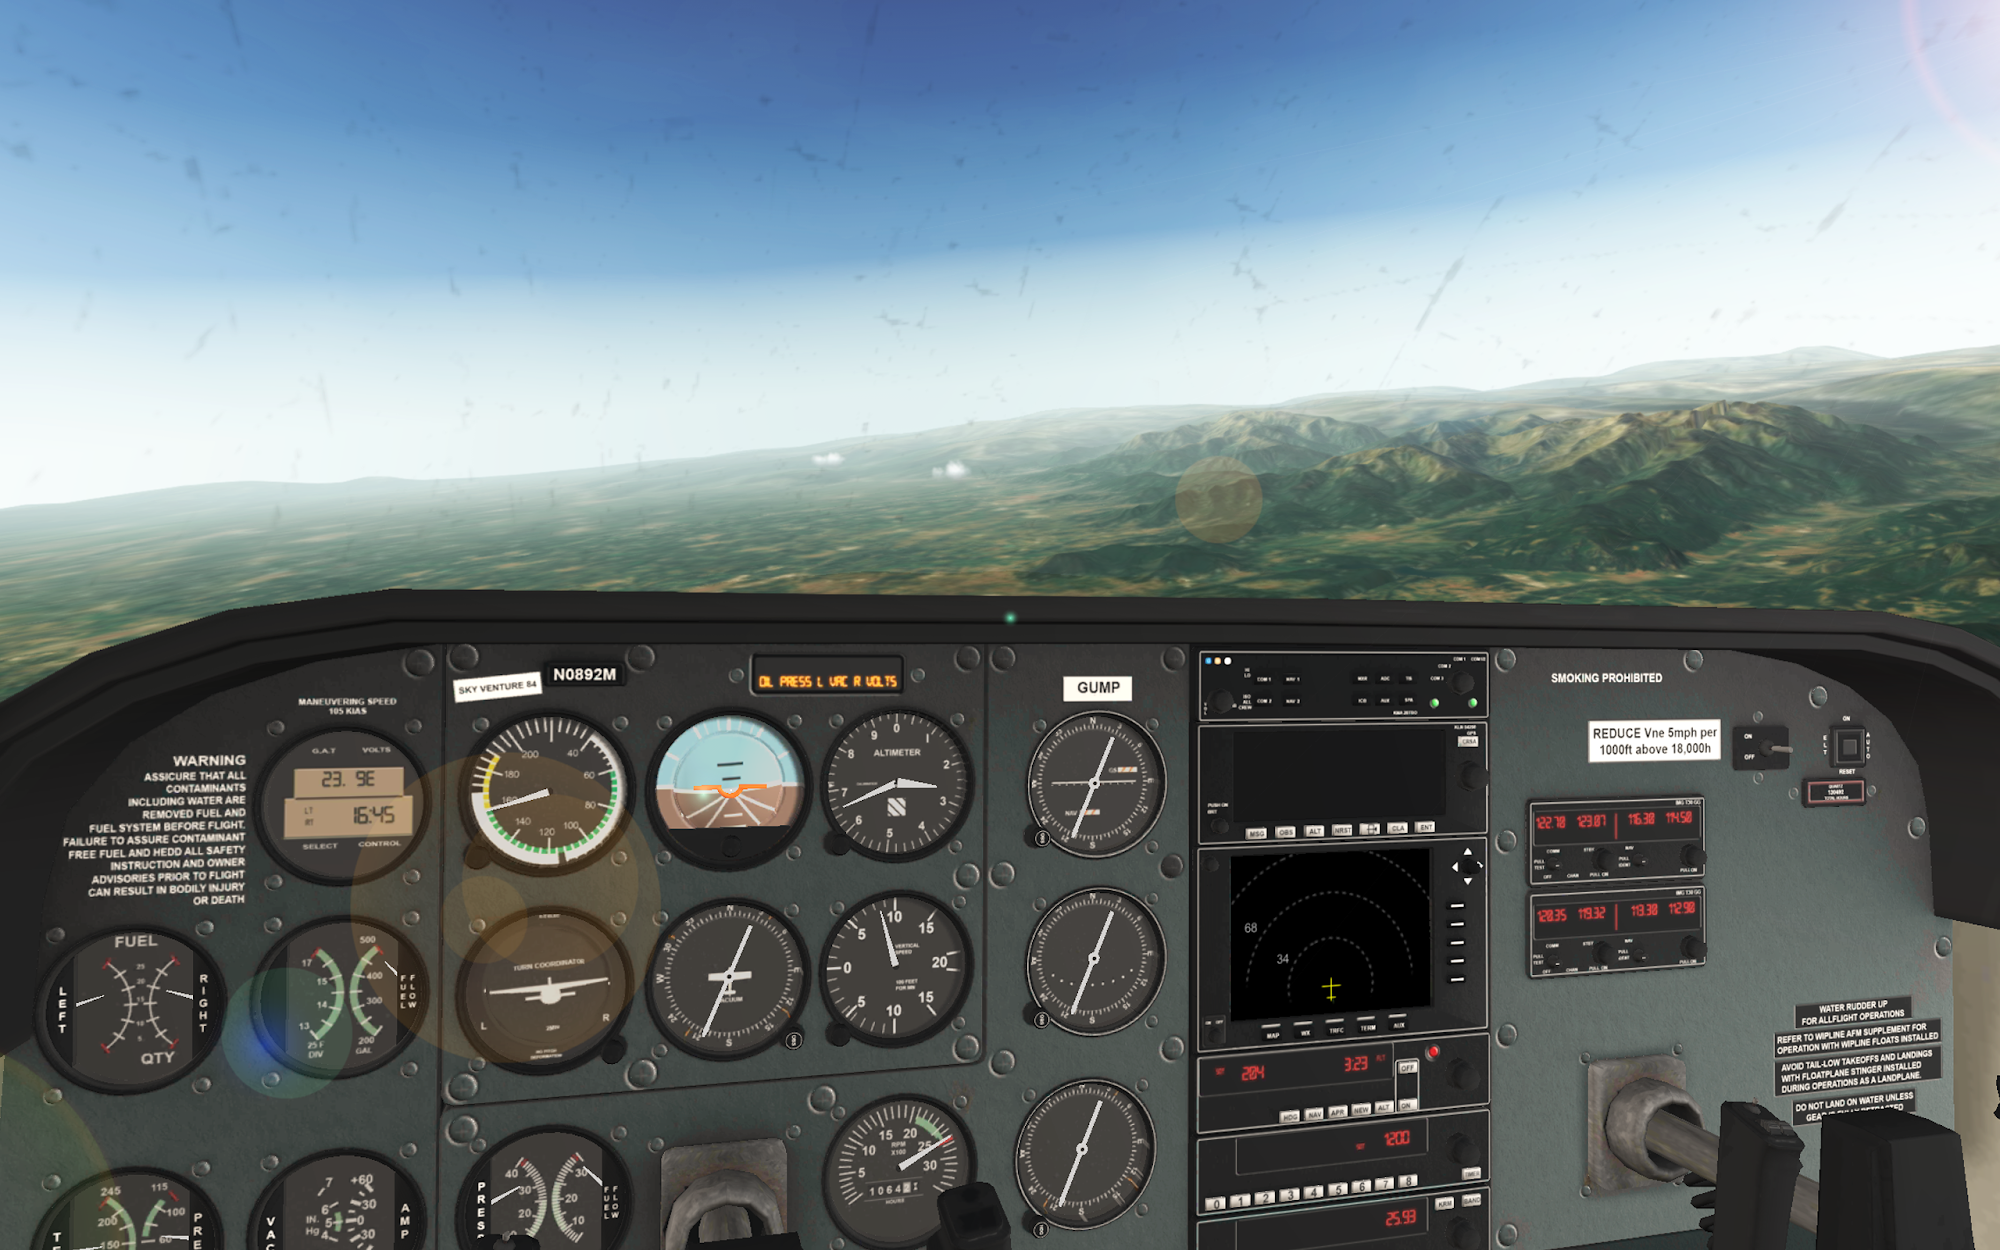 RFS - Real Flight Simulator for Android